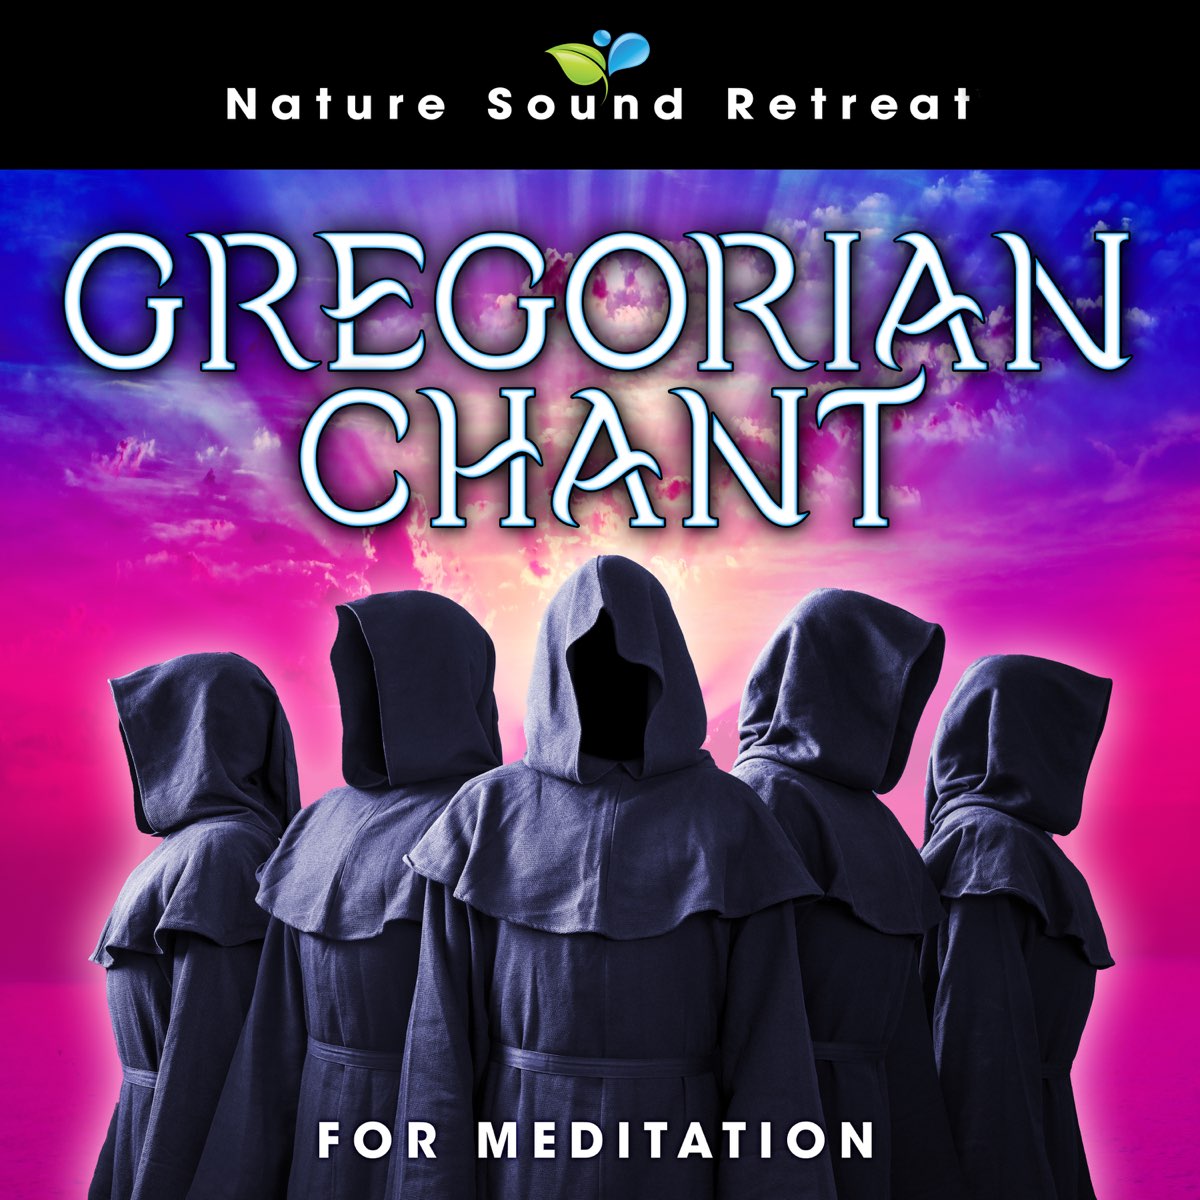 Gregorian chant for sleep